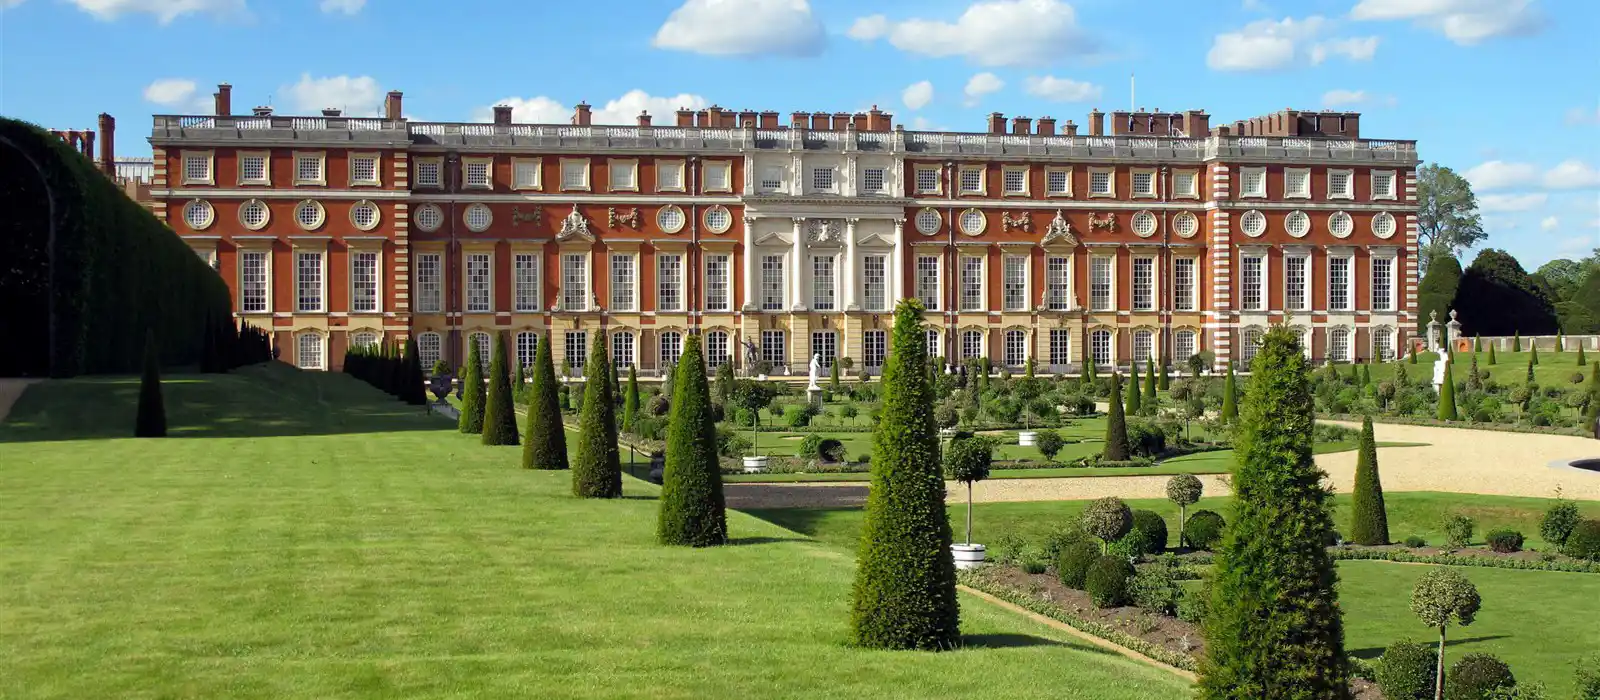 Hampton Court Palace in Surrey